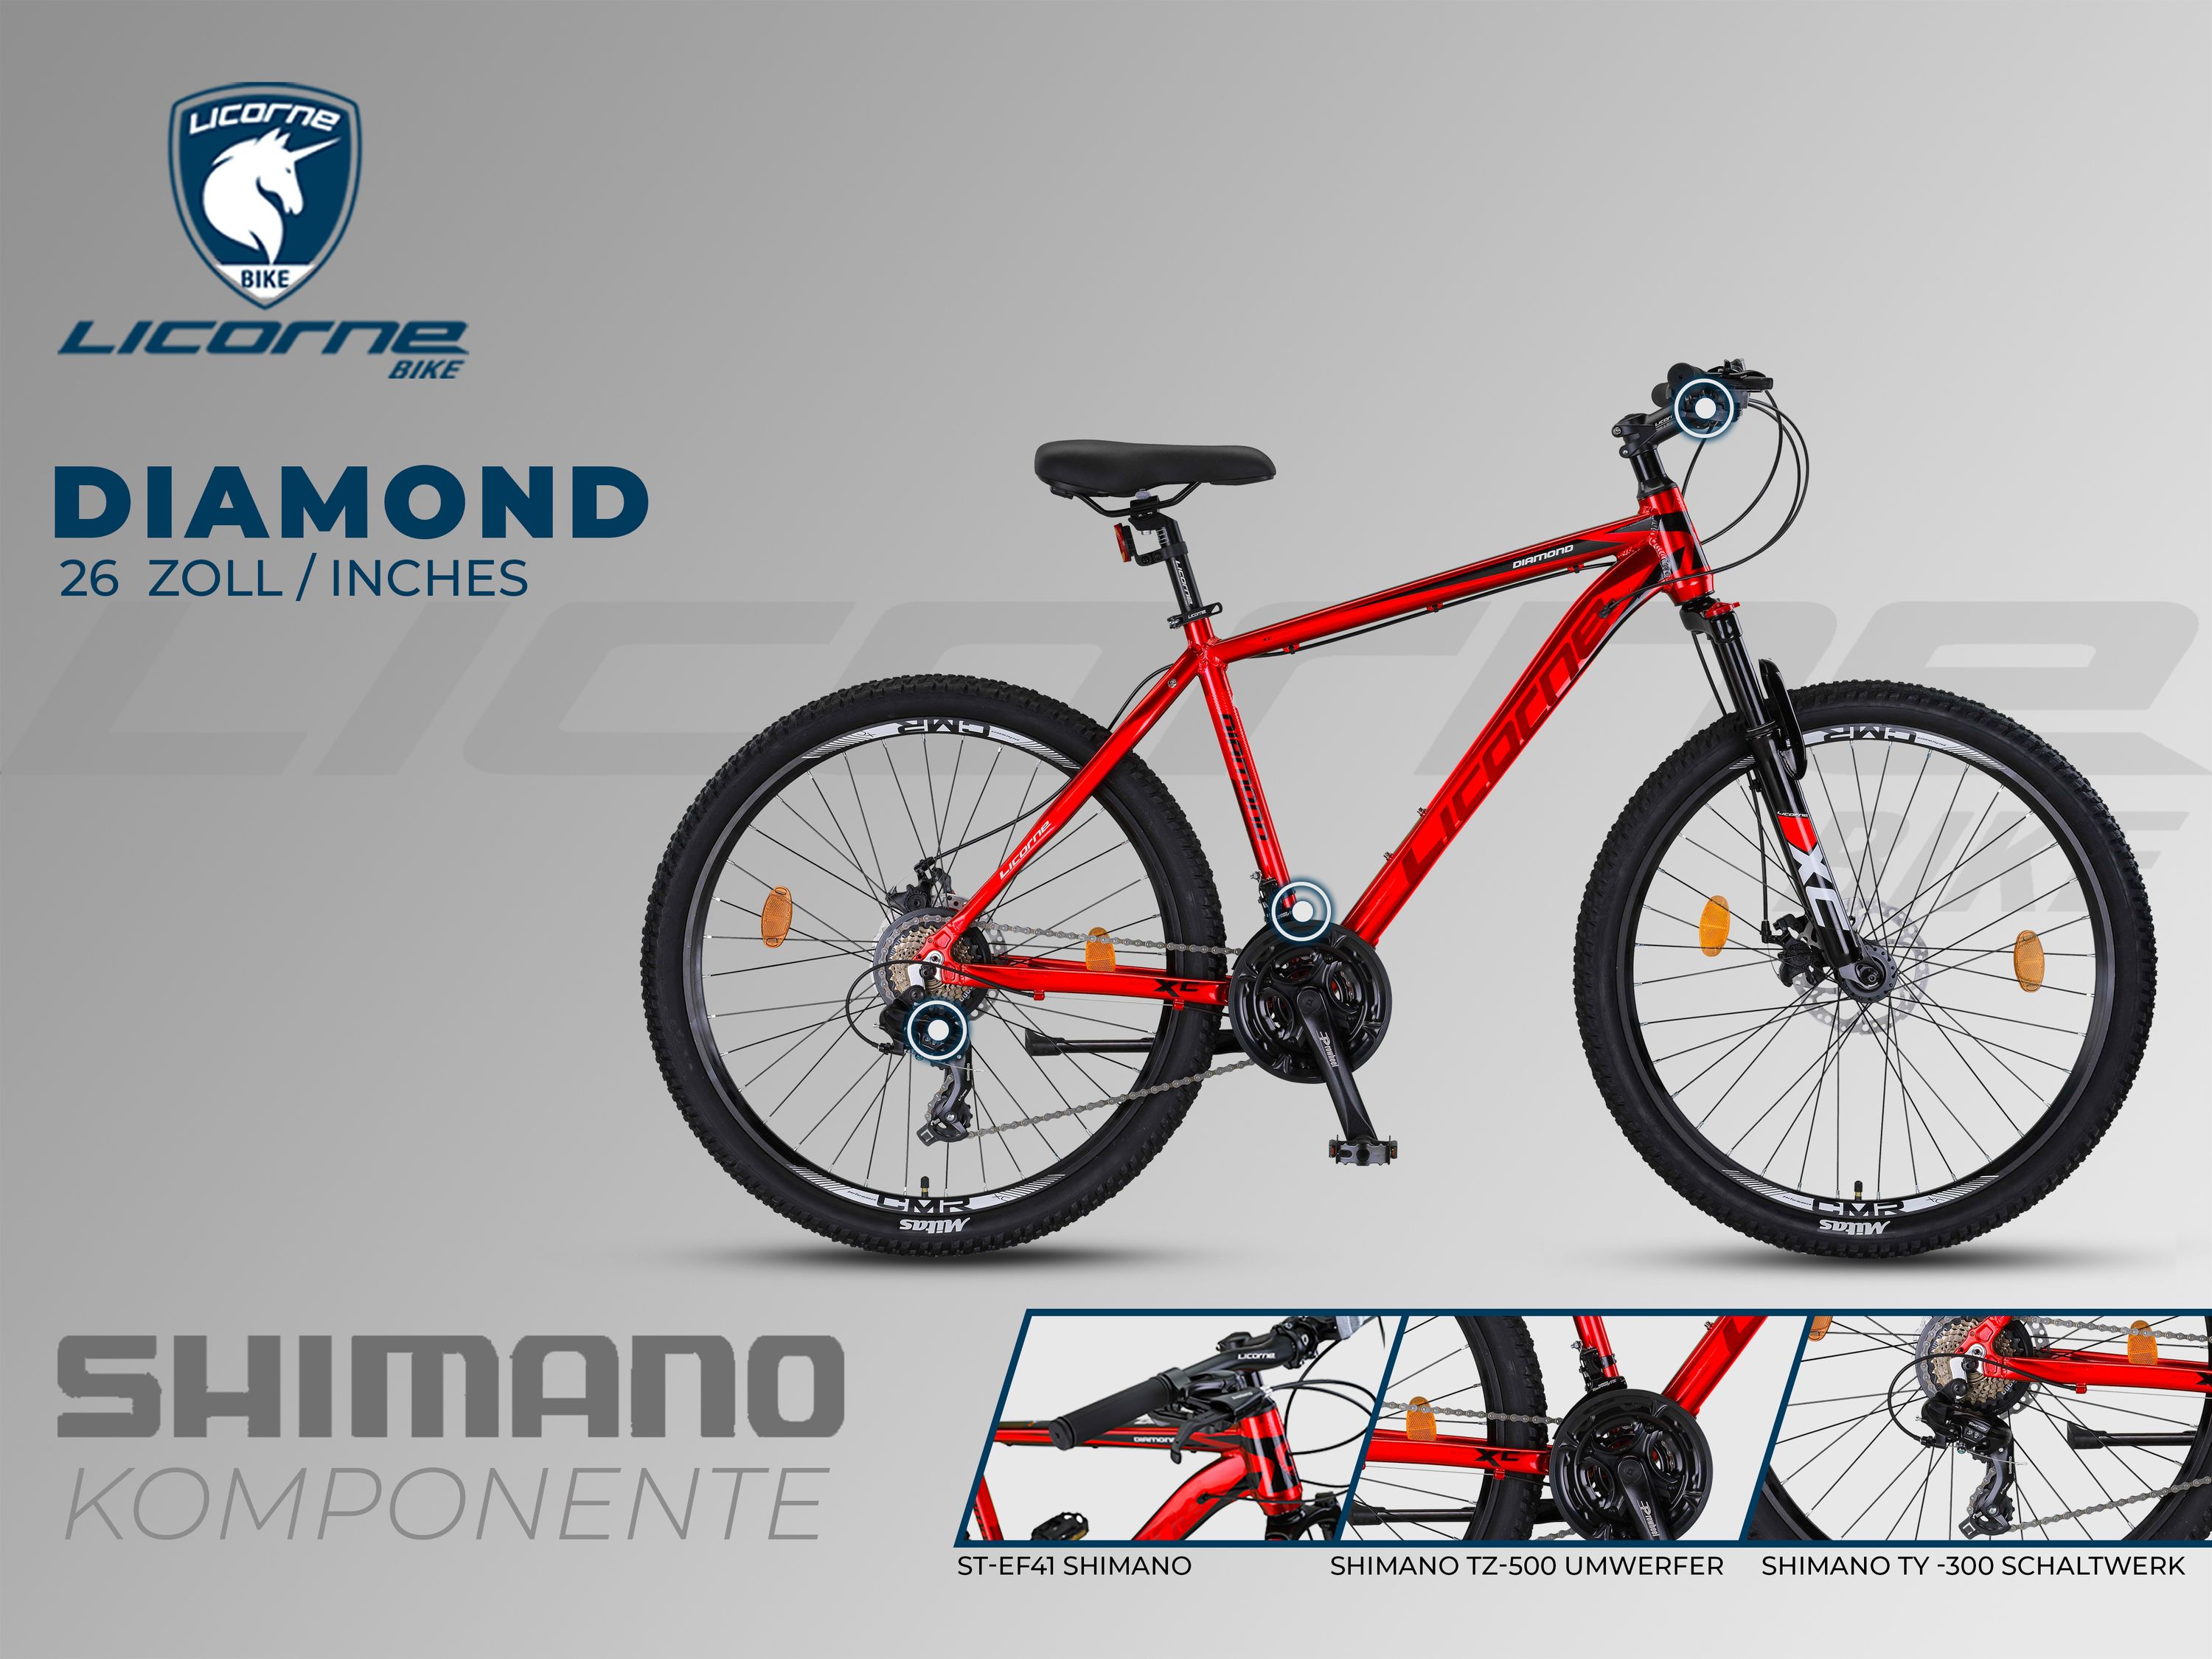 Licorne Bike Diamond premium mountain bike aluminum, bike for boys, girls, men and women - 21 speed gears - disc brake men's bike, adjustable front fork 26, 27.5 and 29 inch